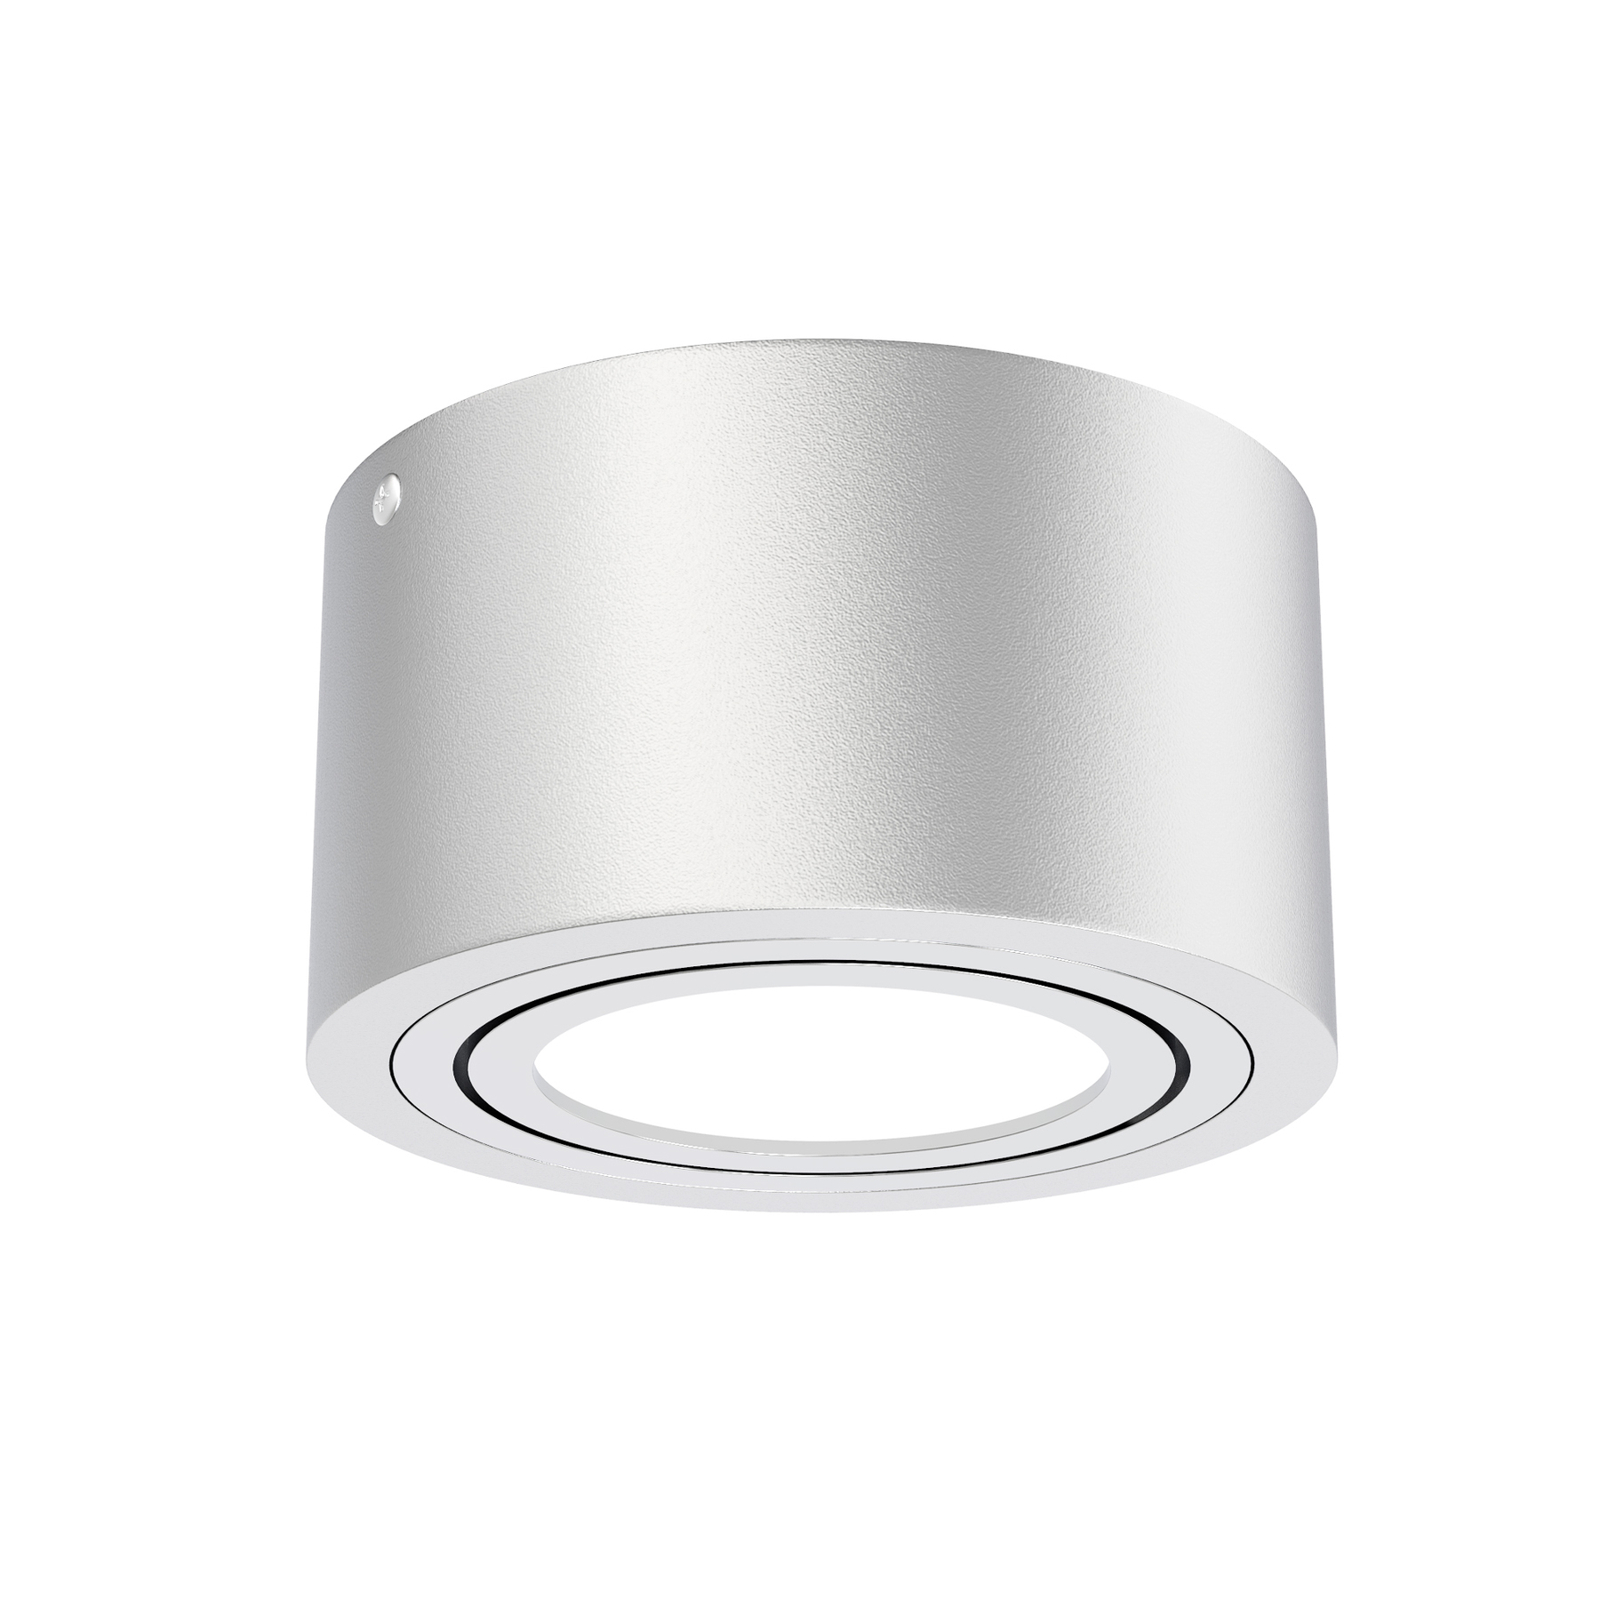 Żarówka rurkowa sufitowa LED, kolor srebrny